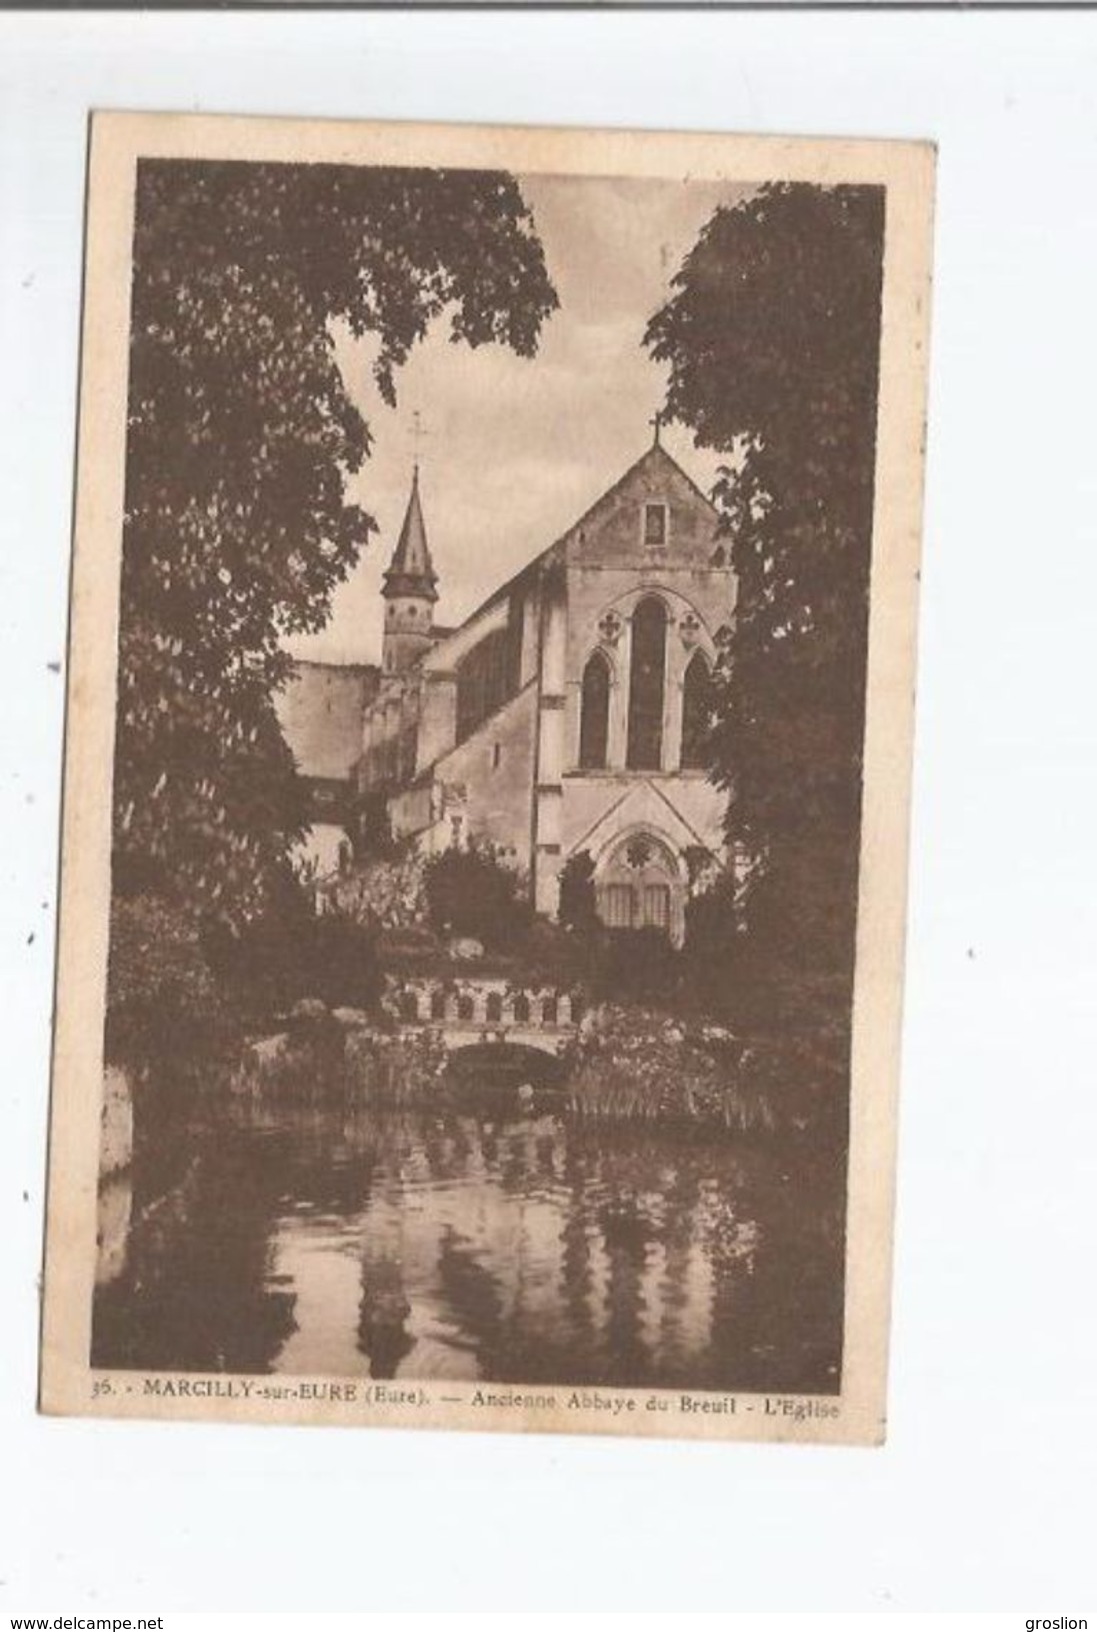 MARCILLY SUR EURE (EURE) 36 ANCIENNE ABBAYE DU BREUIL . L'EGLISE 1936 - Marcilly-sur-Eure